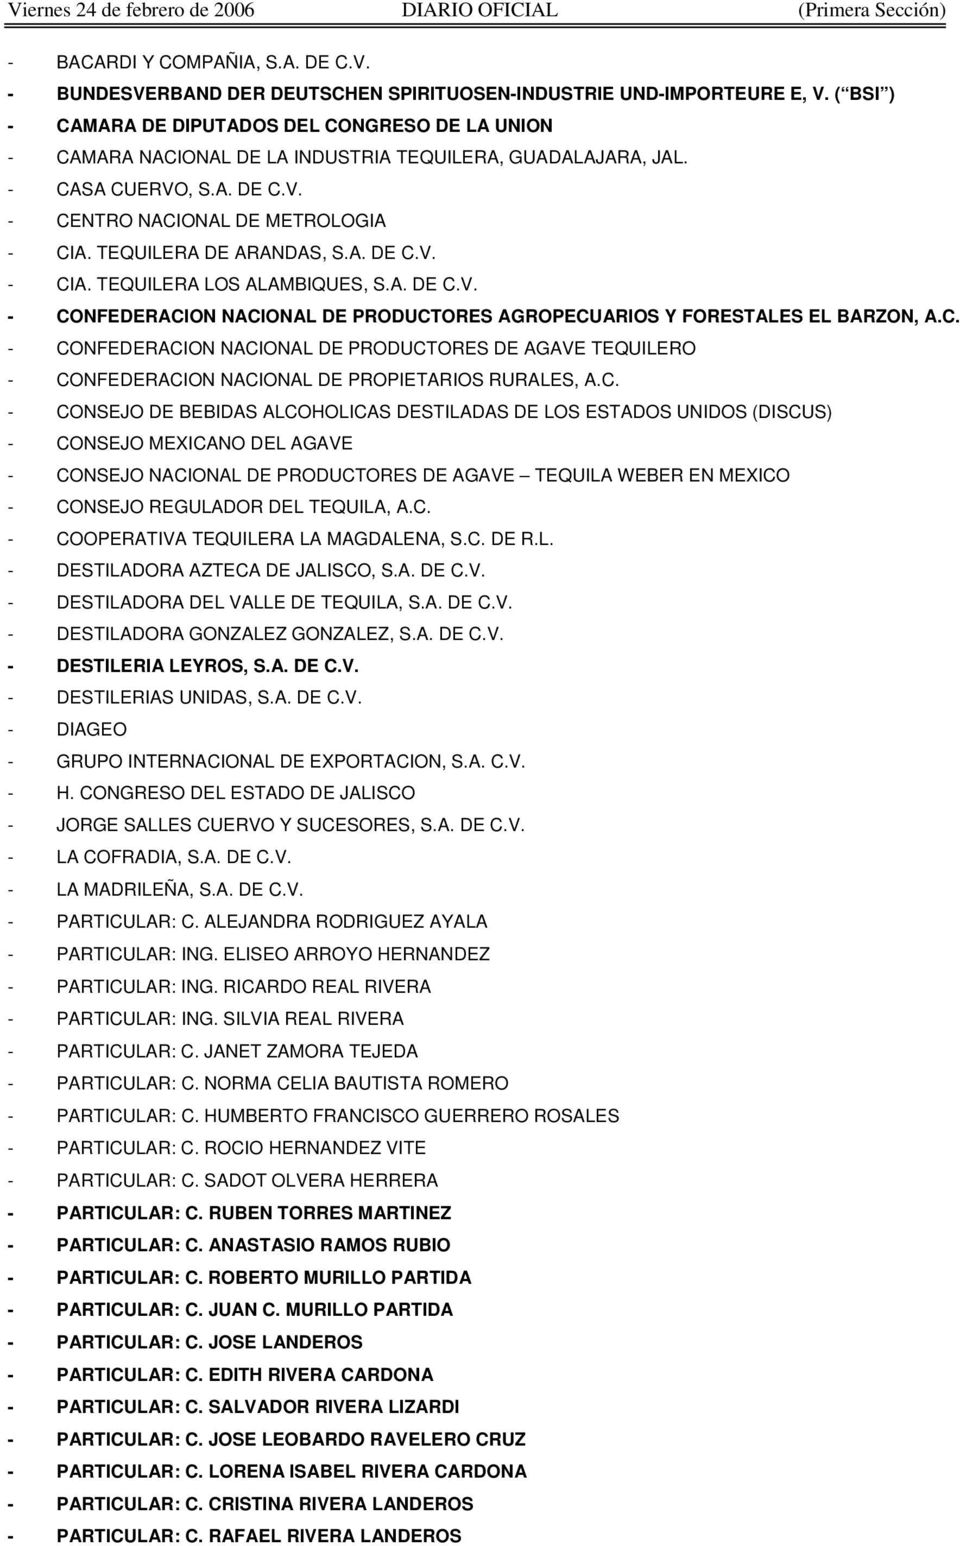 TEQUILERA DE ARANDAS, S.A. DE C.V. - CIA. TEQUILERA LOS ALAMBIQUES, S.A. DE C.V. - CONFEDERACION NACIONAL DE PRODUCTORES AGROPECUARIOS Y FORESTALES EL BARZON, A.C. - CONFEDERACION NACIONAL DE PRODUCTORES DE AGAVE TEQUILERO - CONFEDERACION NACIONAL DE PROPIETARIOS RURALES, A.